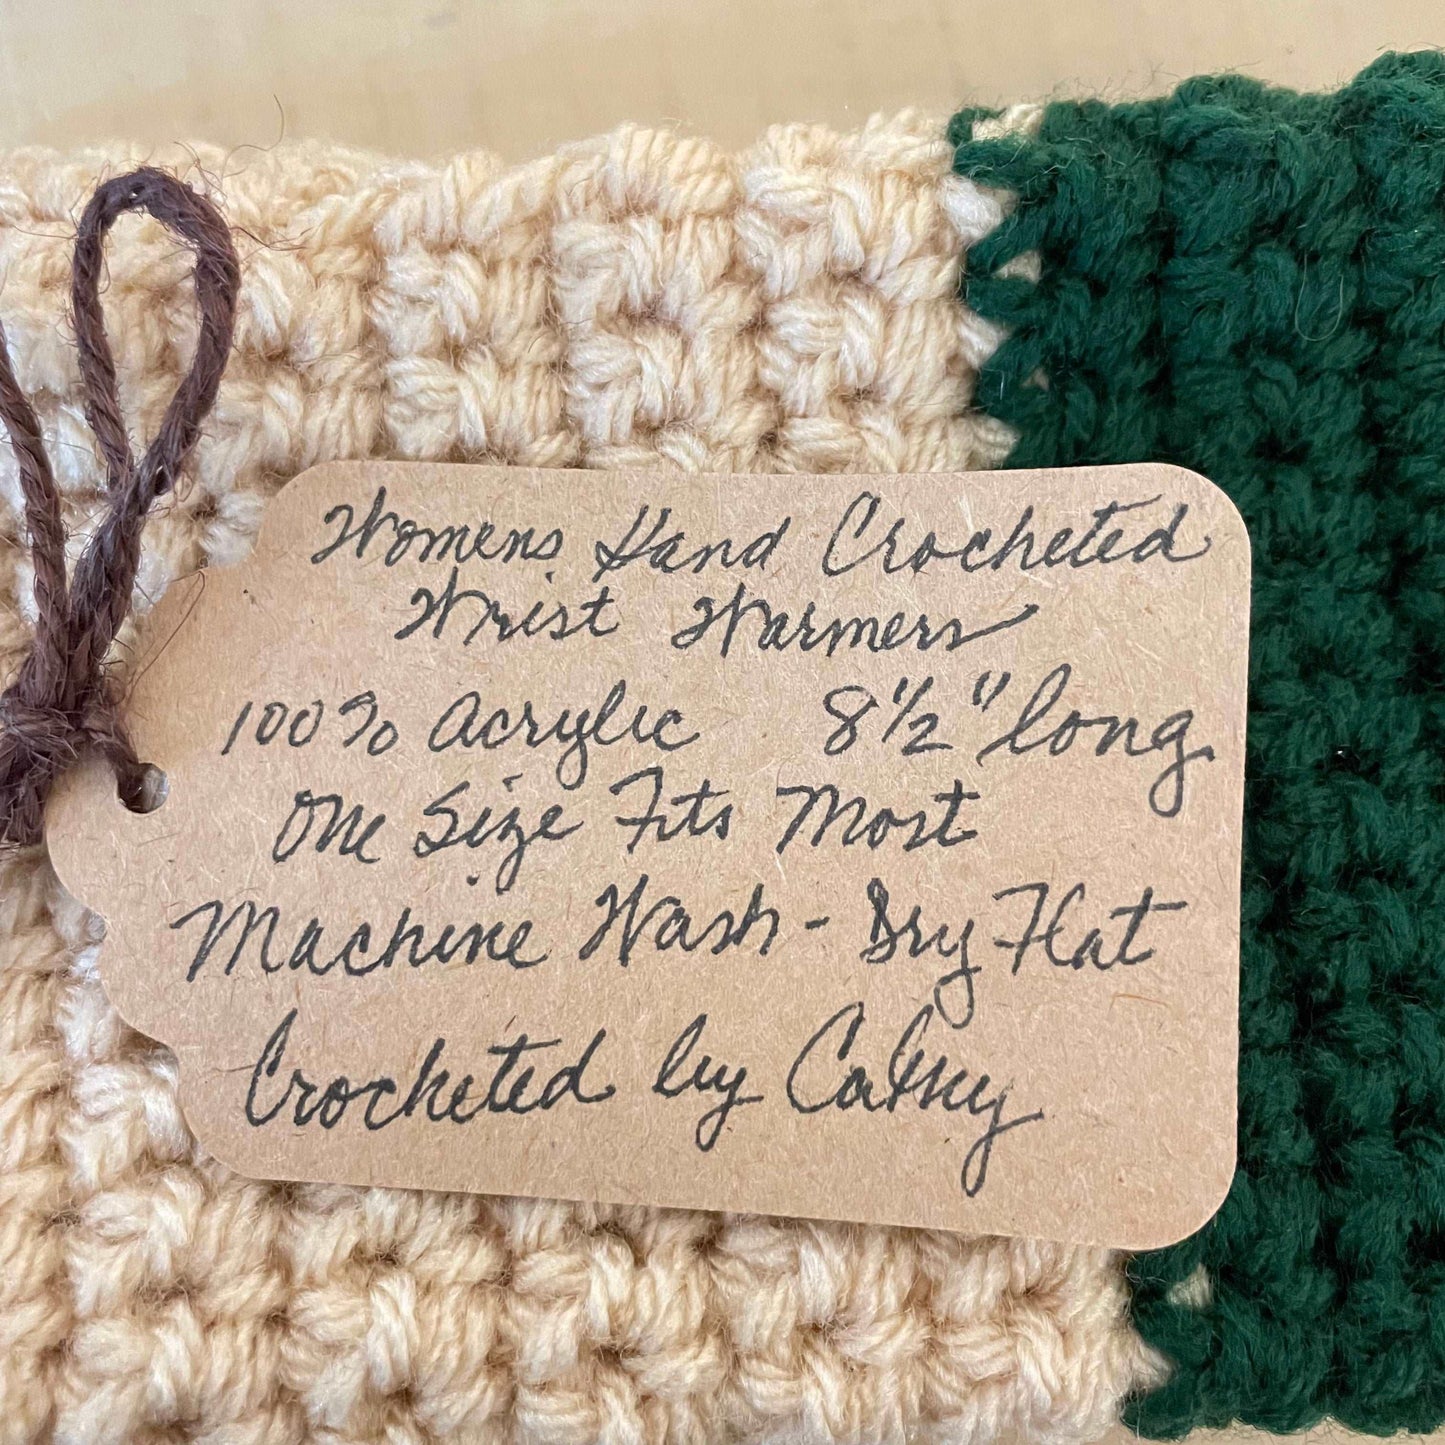 Extra Warm Gift Set Fingerless Gloves Cup Cozy Hunter Green Cream Colorblock Crochet Knit Fall Winter Boho Bohemian Handmade 2 Piece Accessory